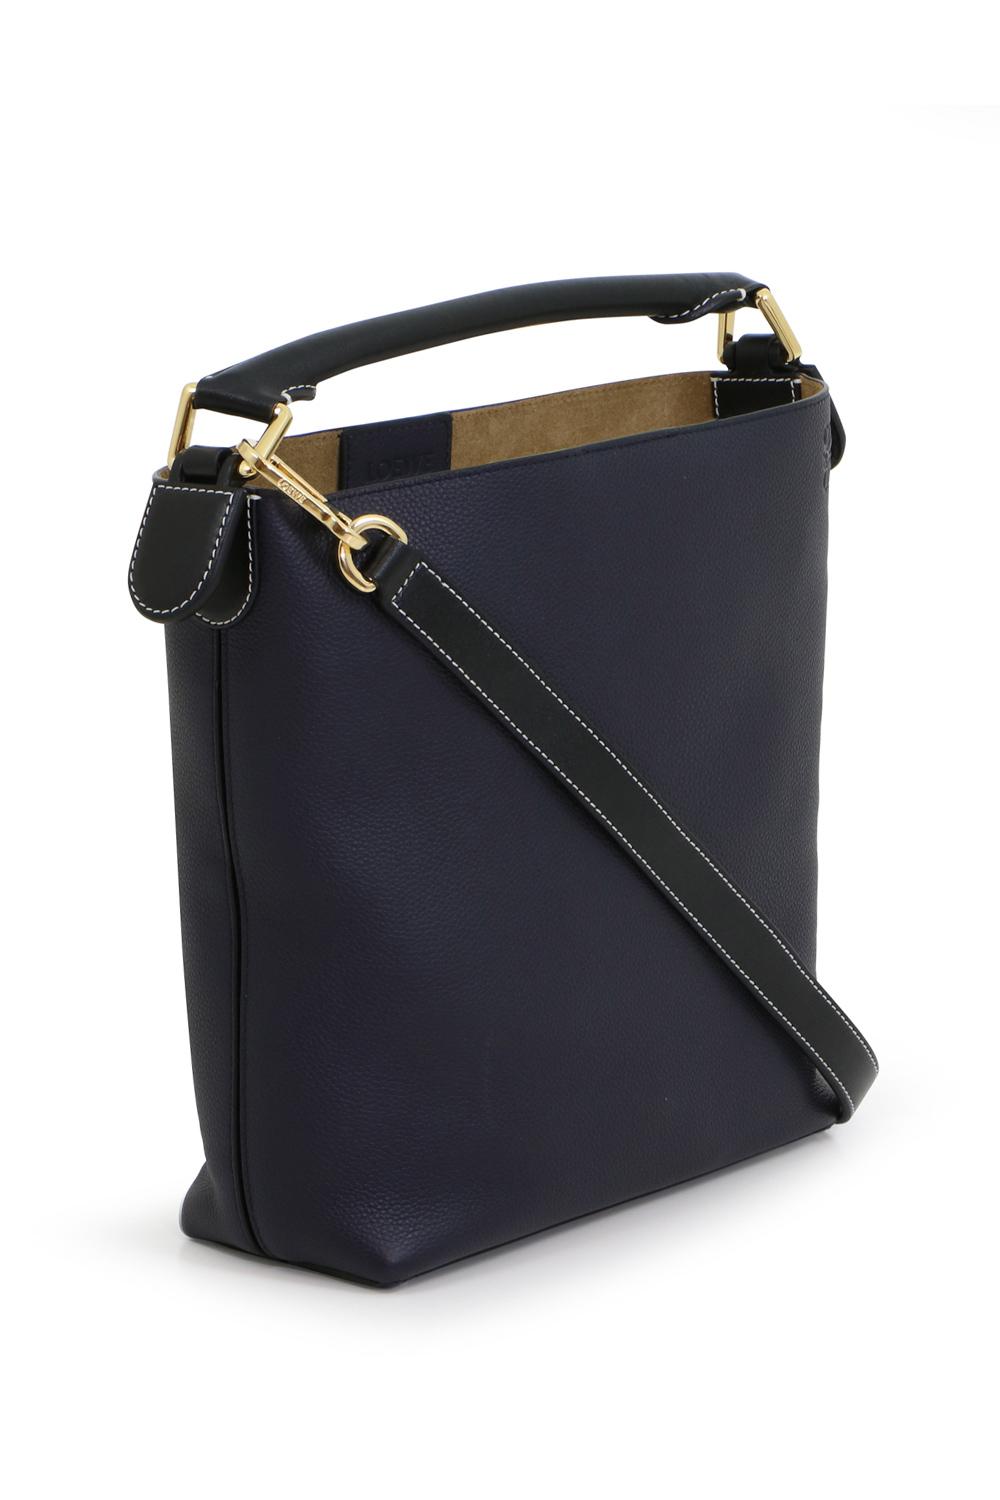 Loewe Leather T Bucket Small Bag Midnight Blue/black - Lyst